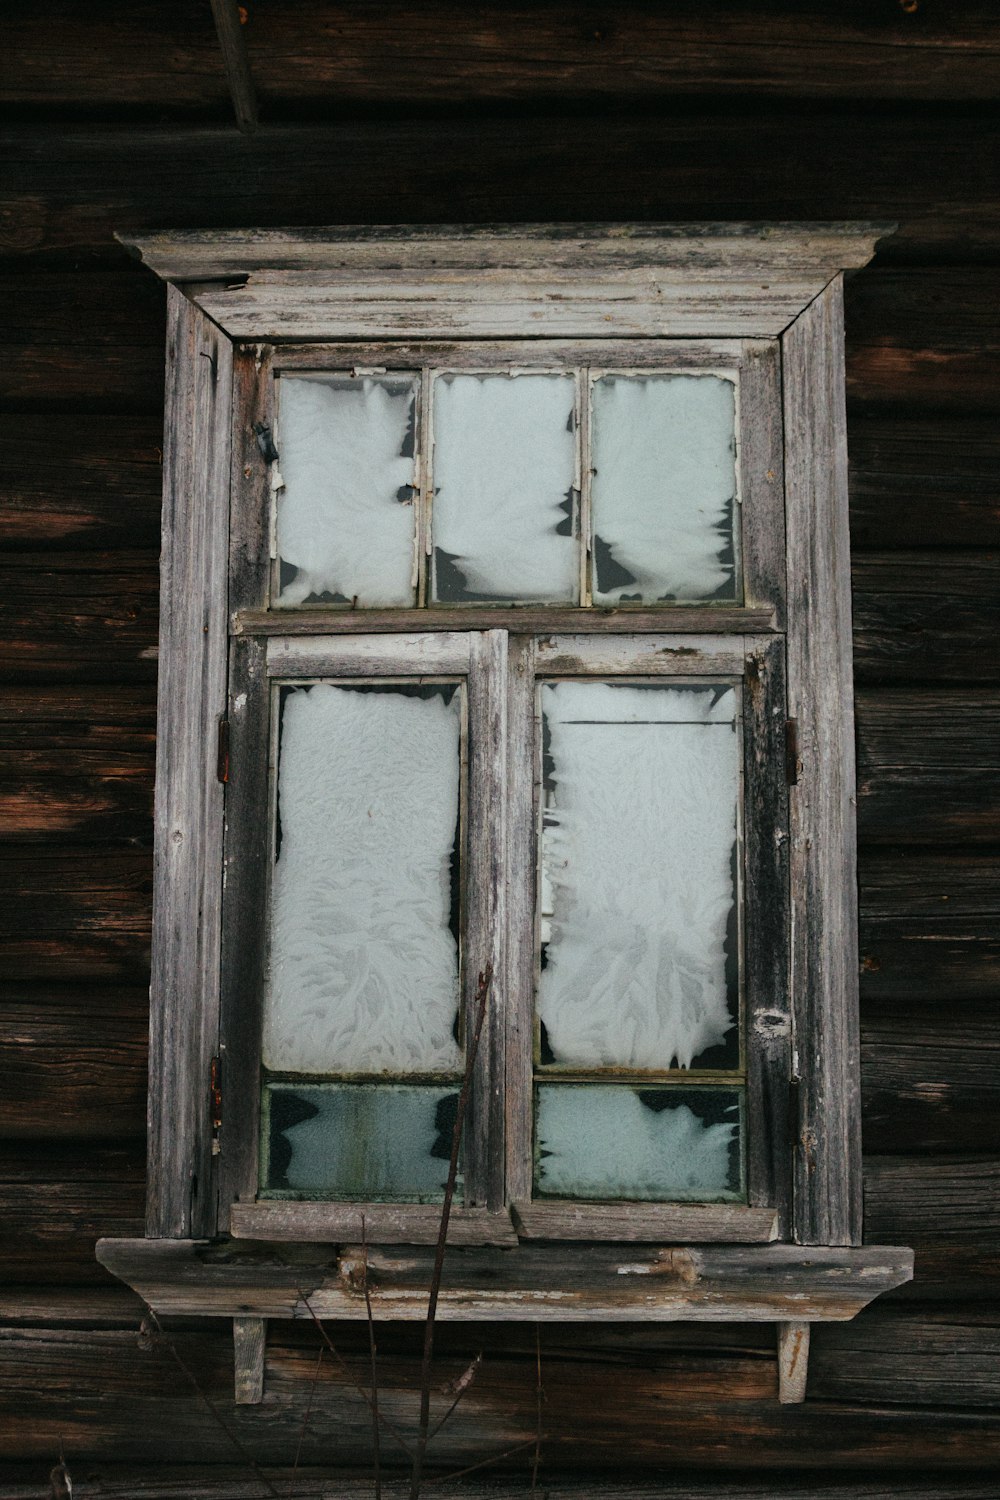 a broken window in a wooden building